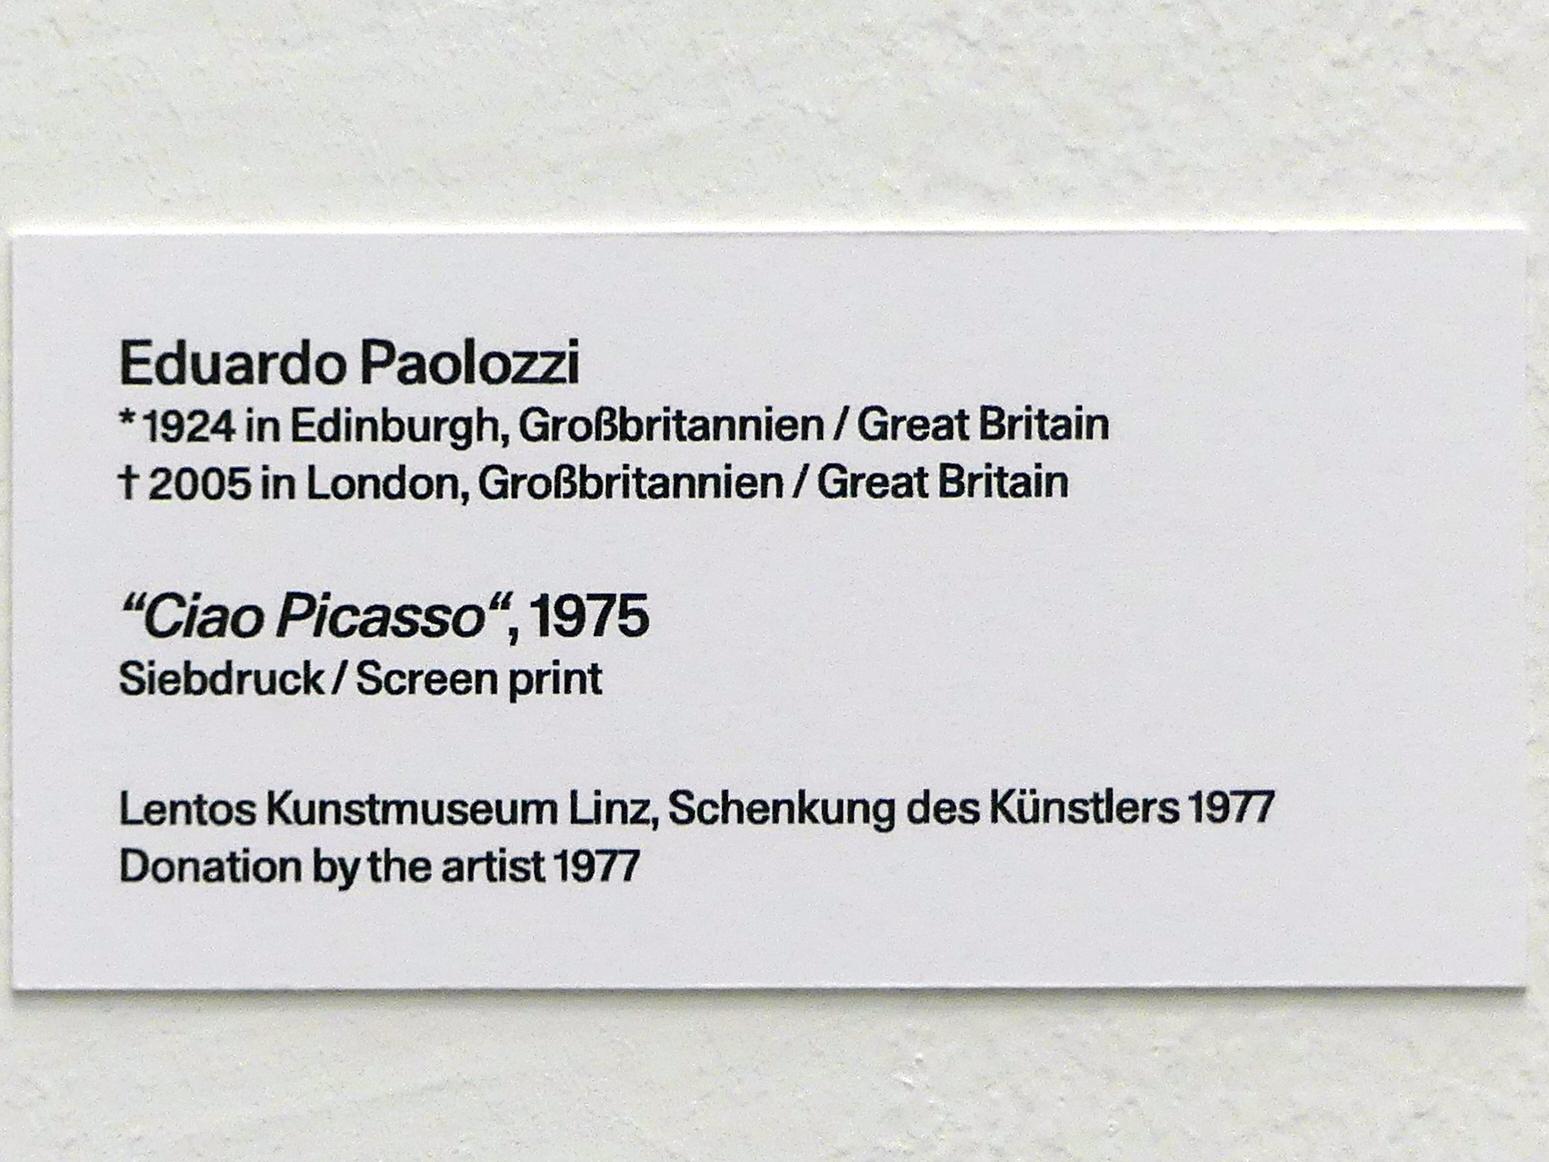 Eduardo Paolozzi (1963–1975), "Ciao Picasso", Linz, Lentos Kunstmuseum Linz, Saal 10 - Zu schade für die Lade, 1975, Bild 2/2